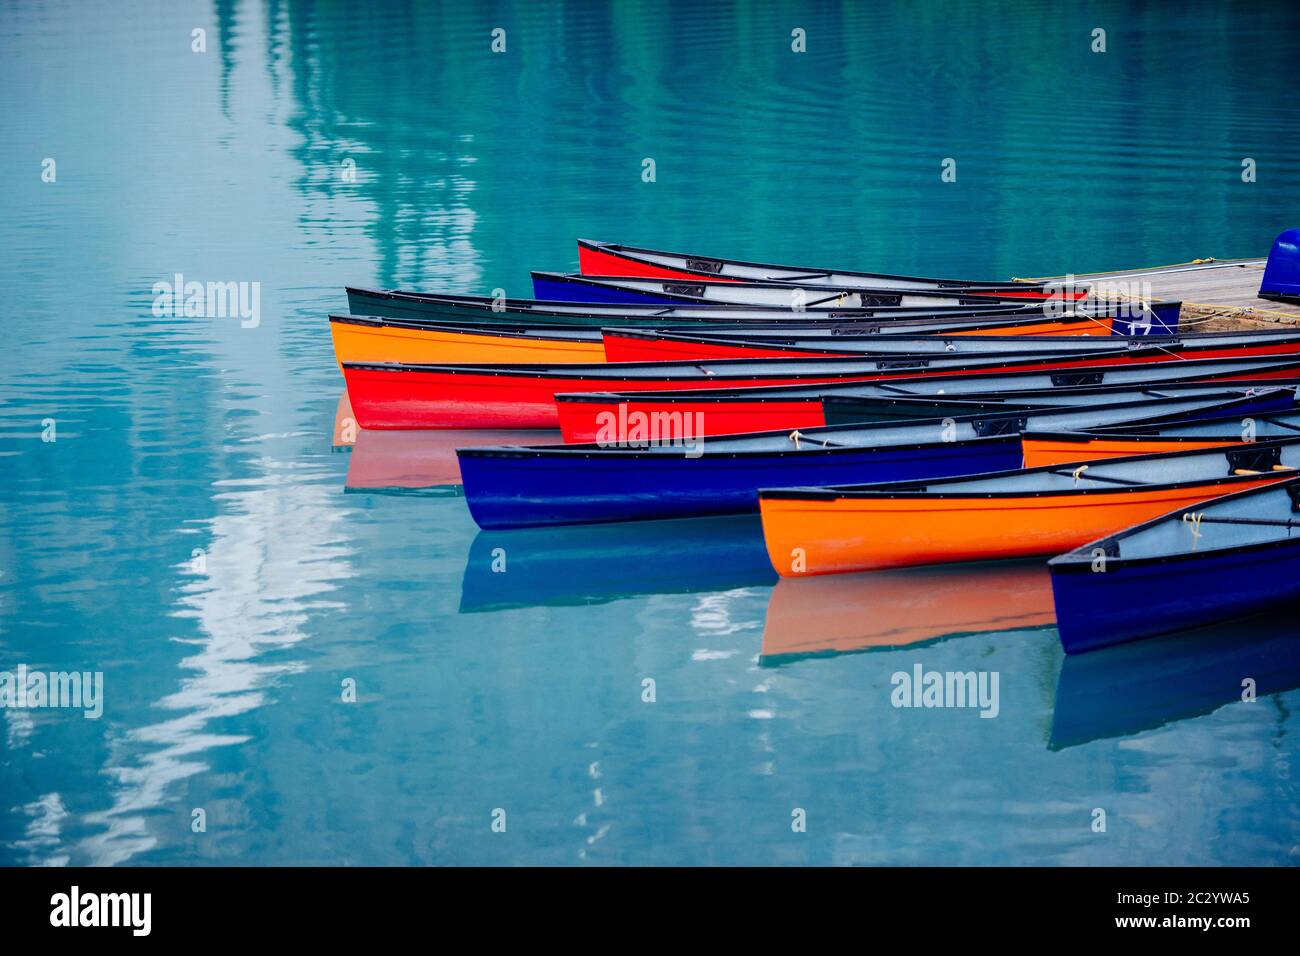 Barques colorées amarrées dans un lac calme, Banff, Alberta, Canada Banque D'Images